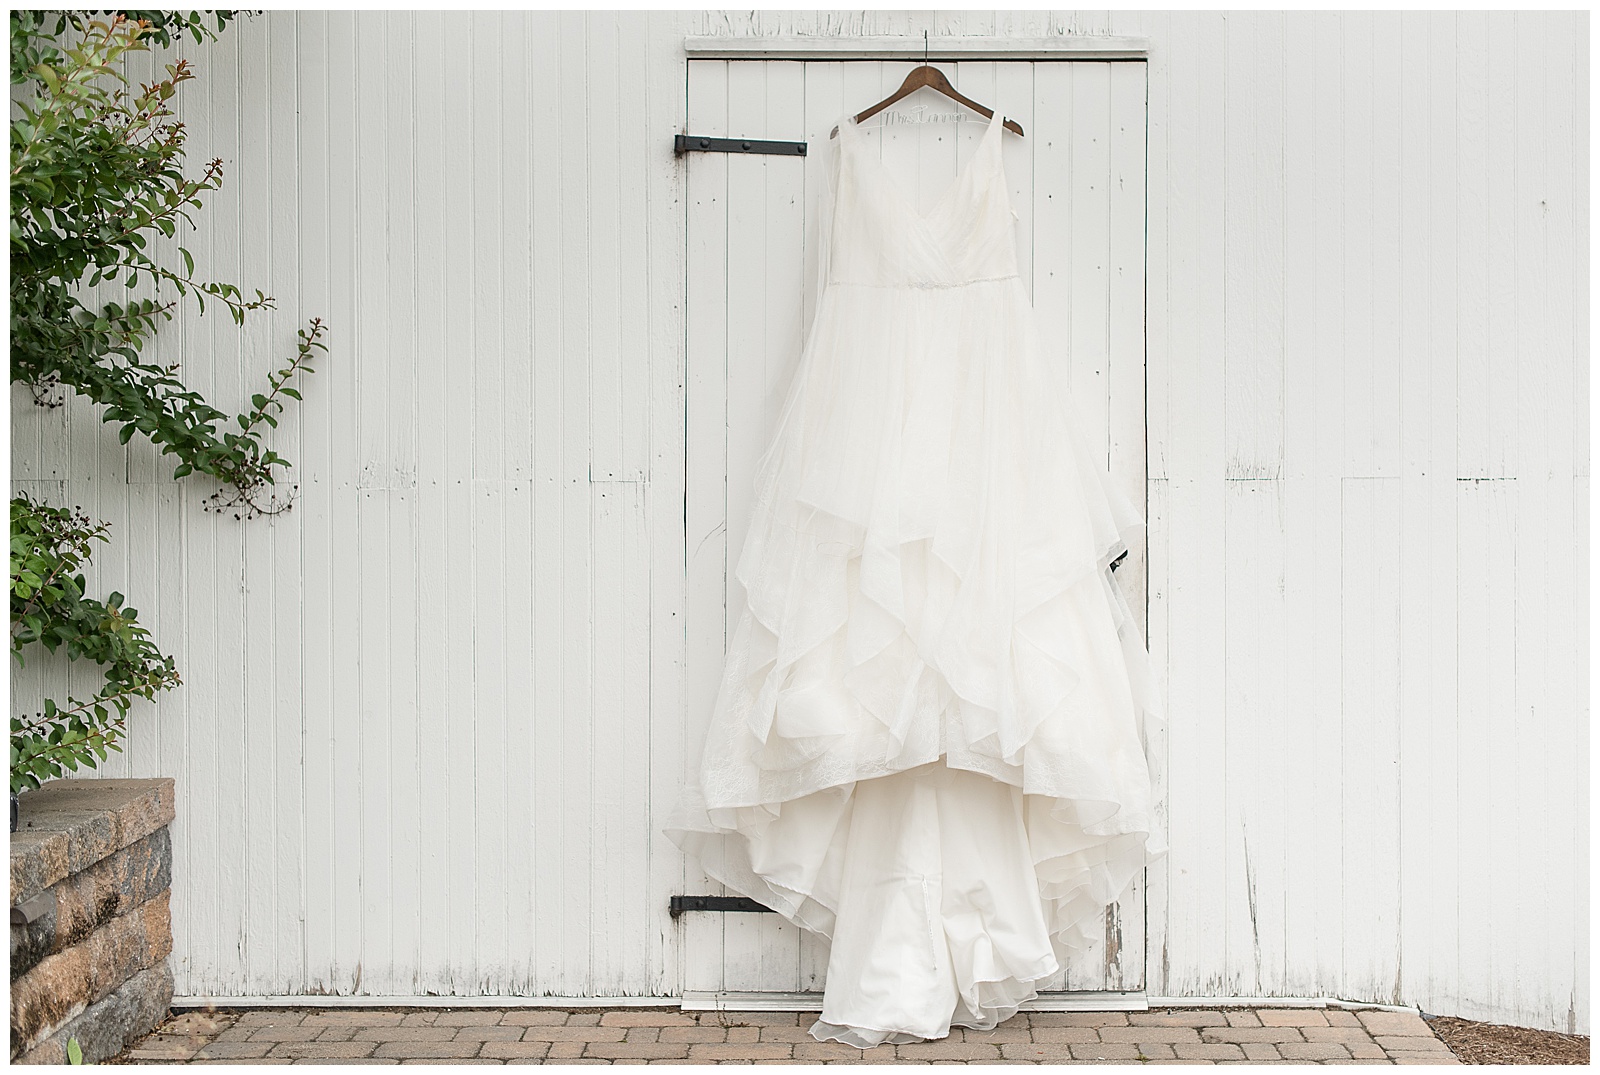 beautiful white sleeveless wedding gown displayed on wooden hanger above white wooden barn door in manheim, pennsylvania